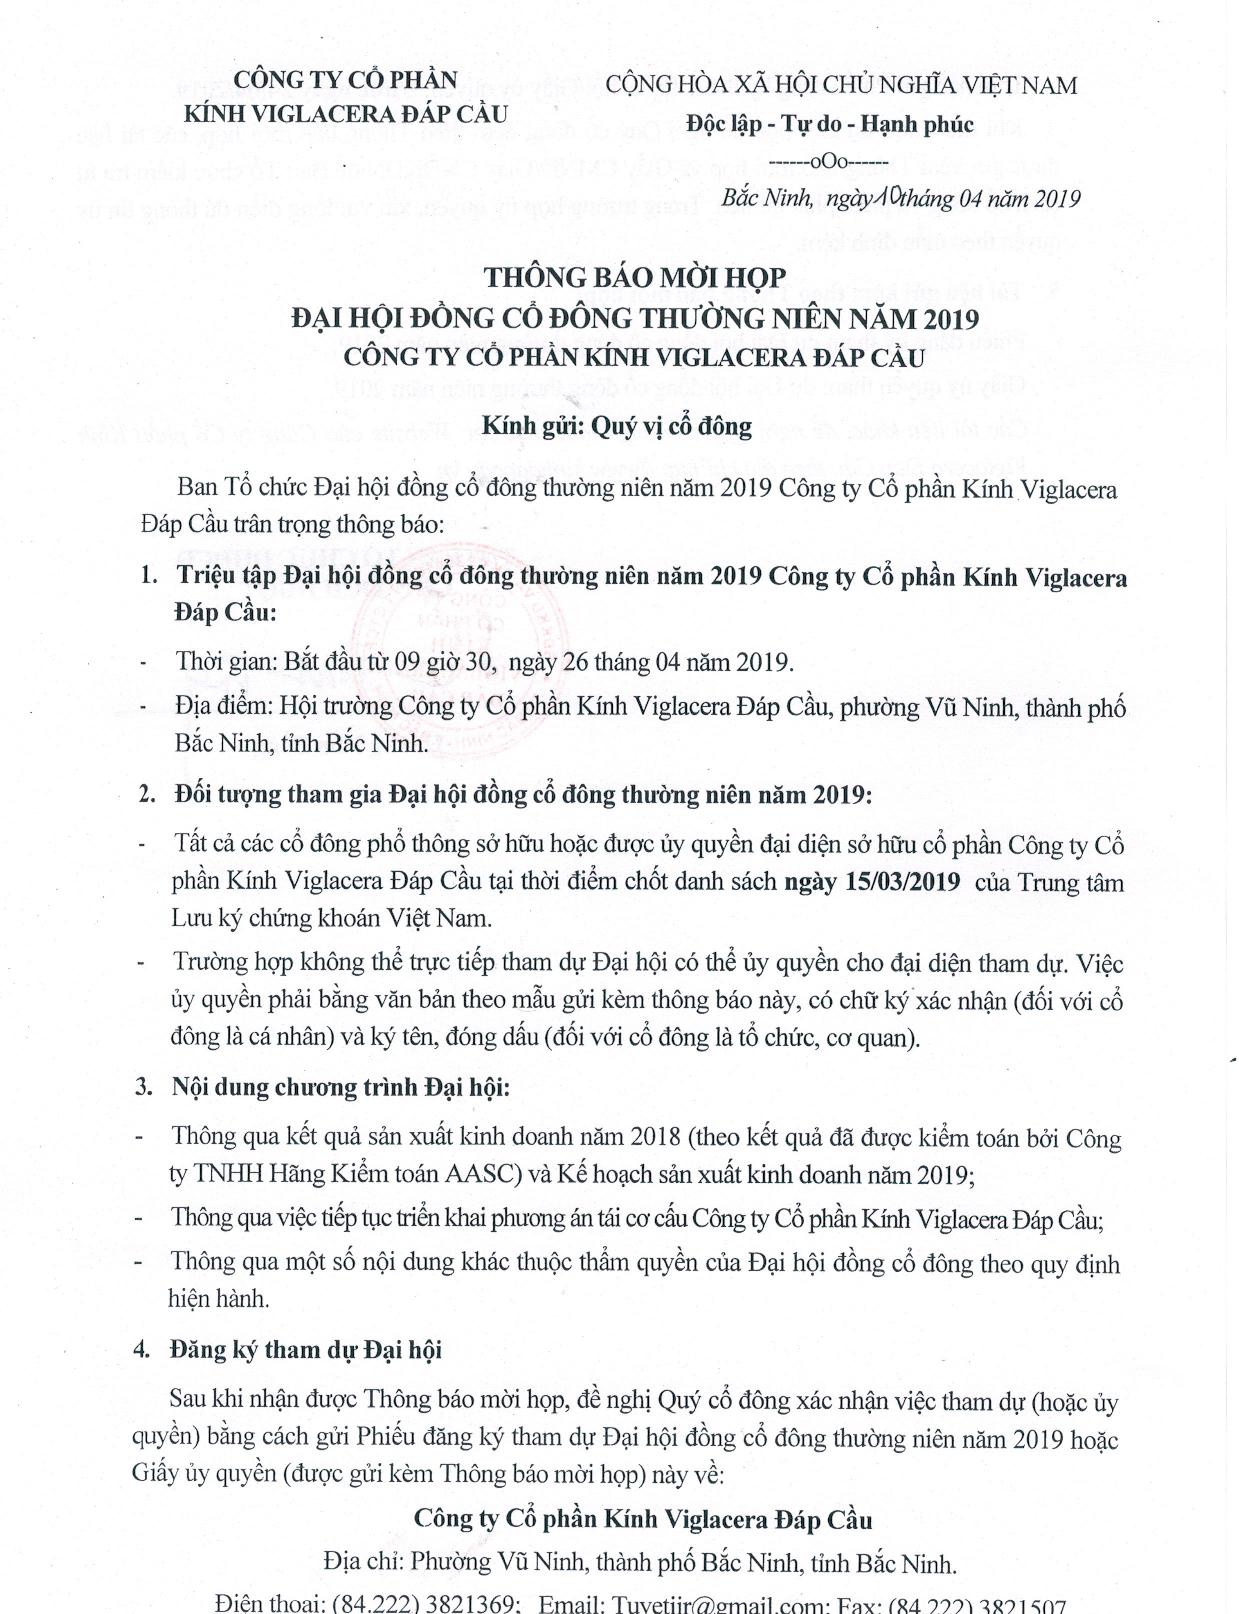 THONG BAO MOI HOP page 001